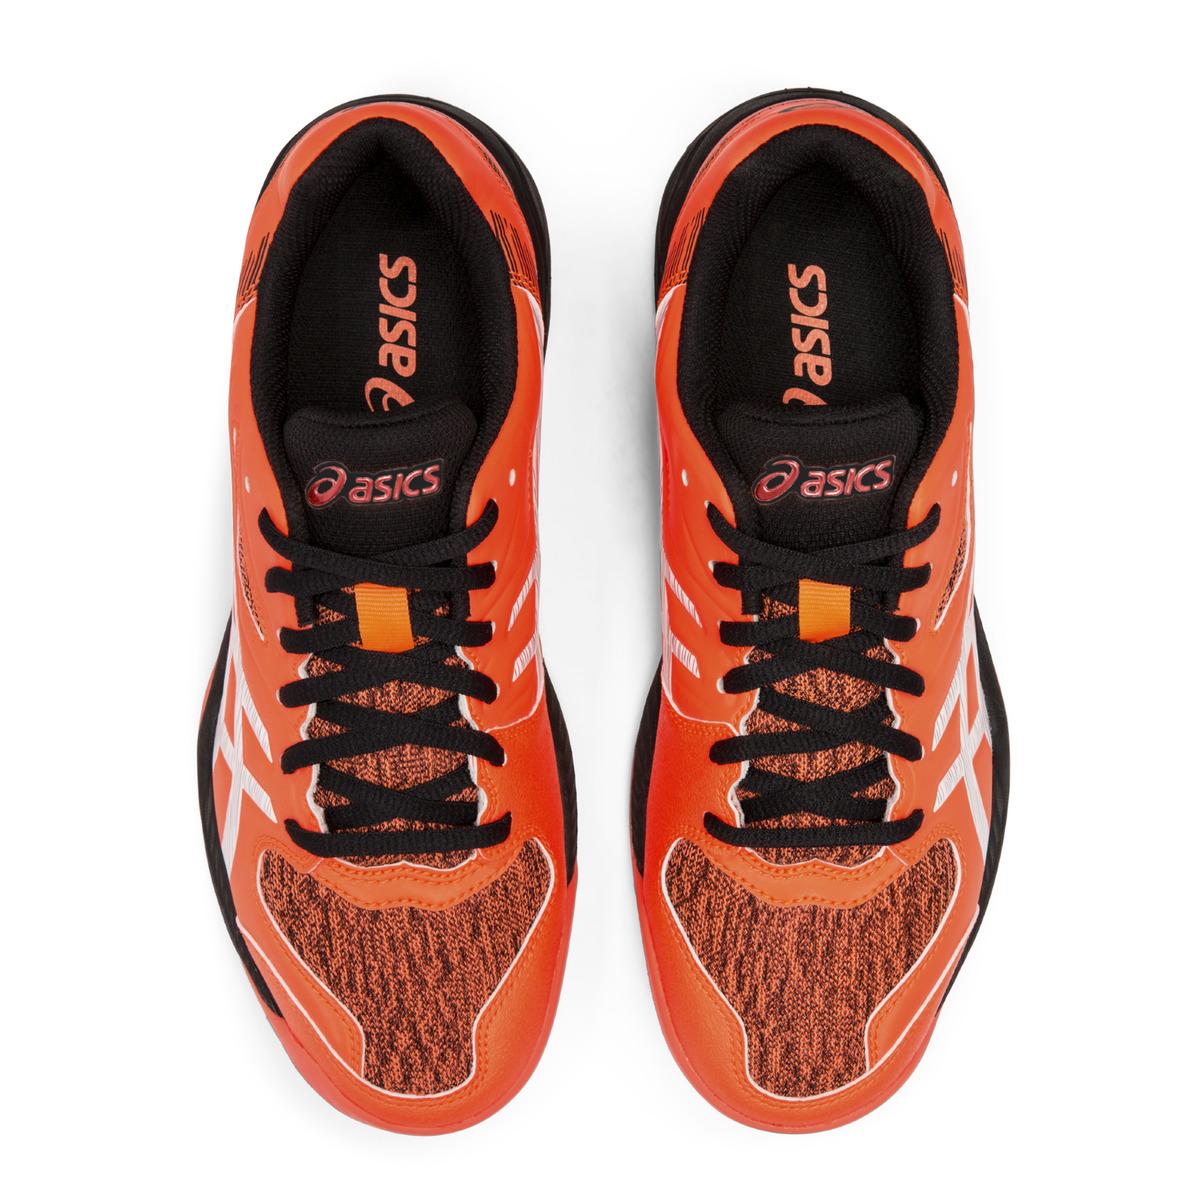 Asics Gel-padel Exclusive 5 Sg Paddle Tennis Shoes in Orange - Lyst